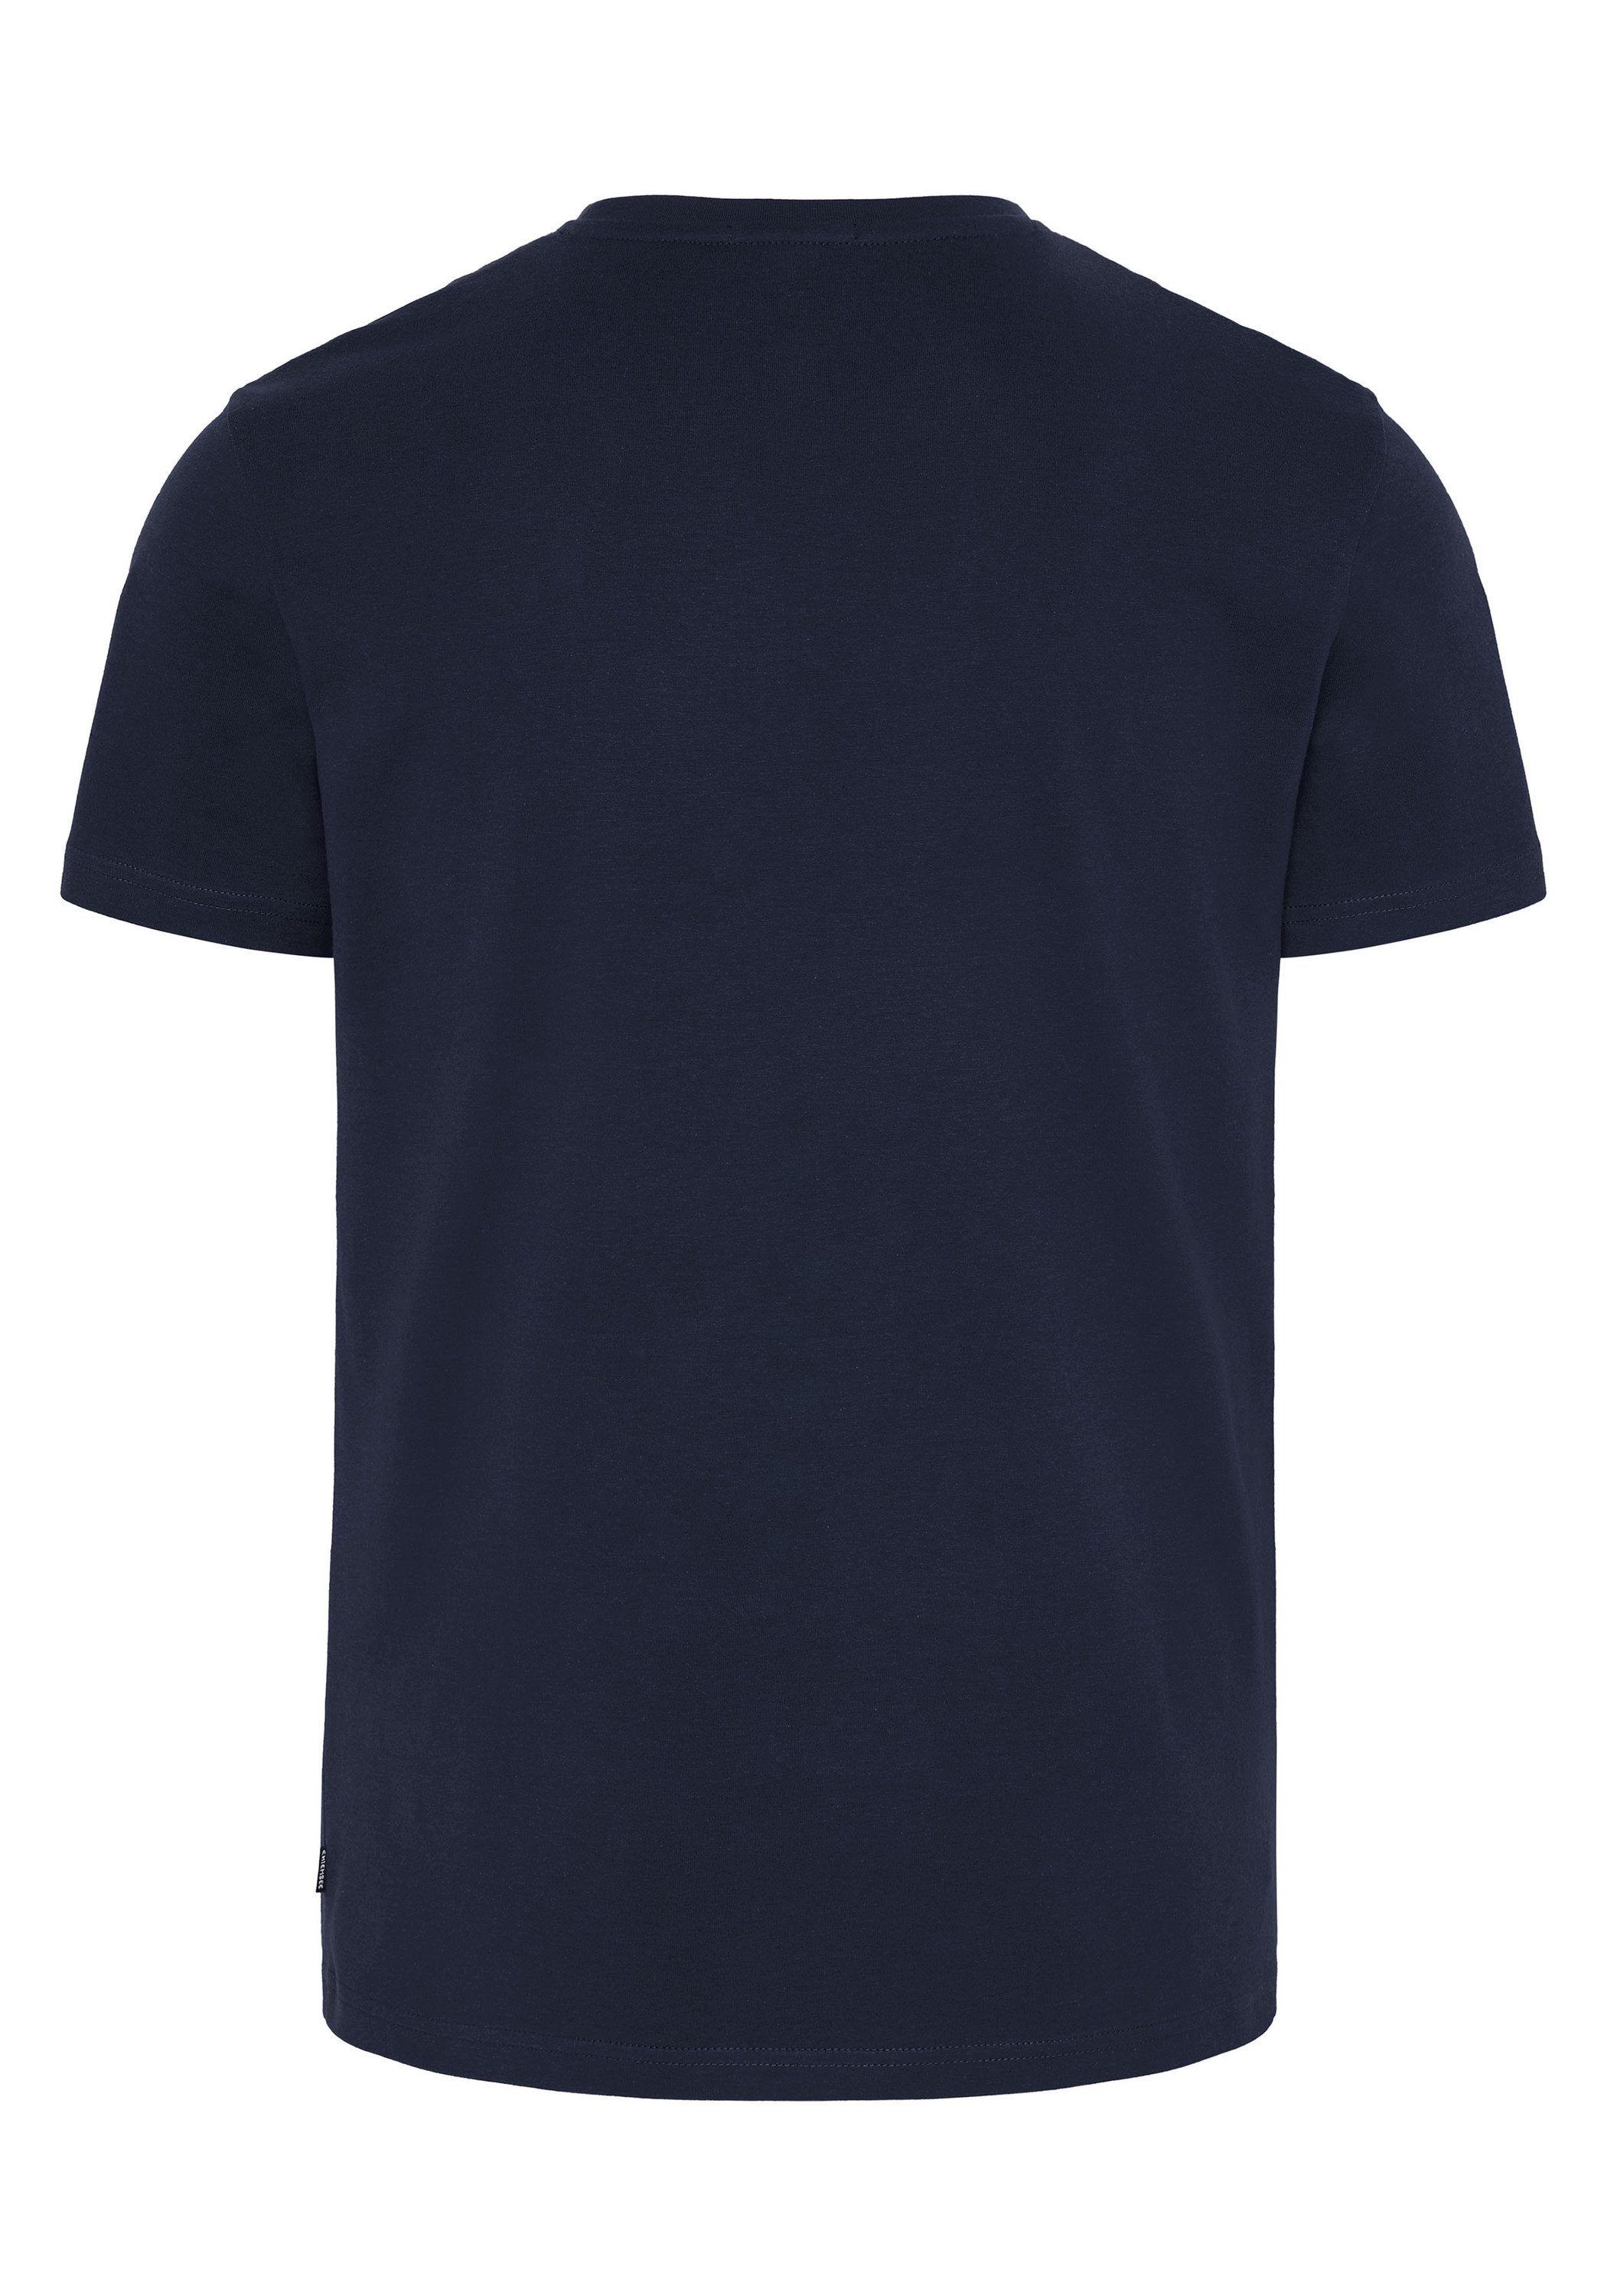 Rundhalsausschnitt Print-Shirt Sky Night Chiemsee mit 1 T-Shirt